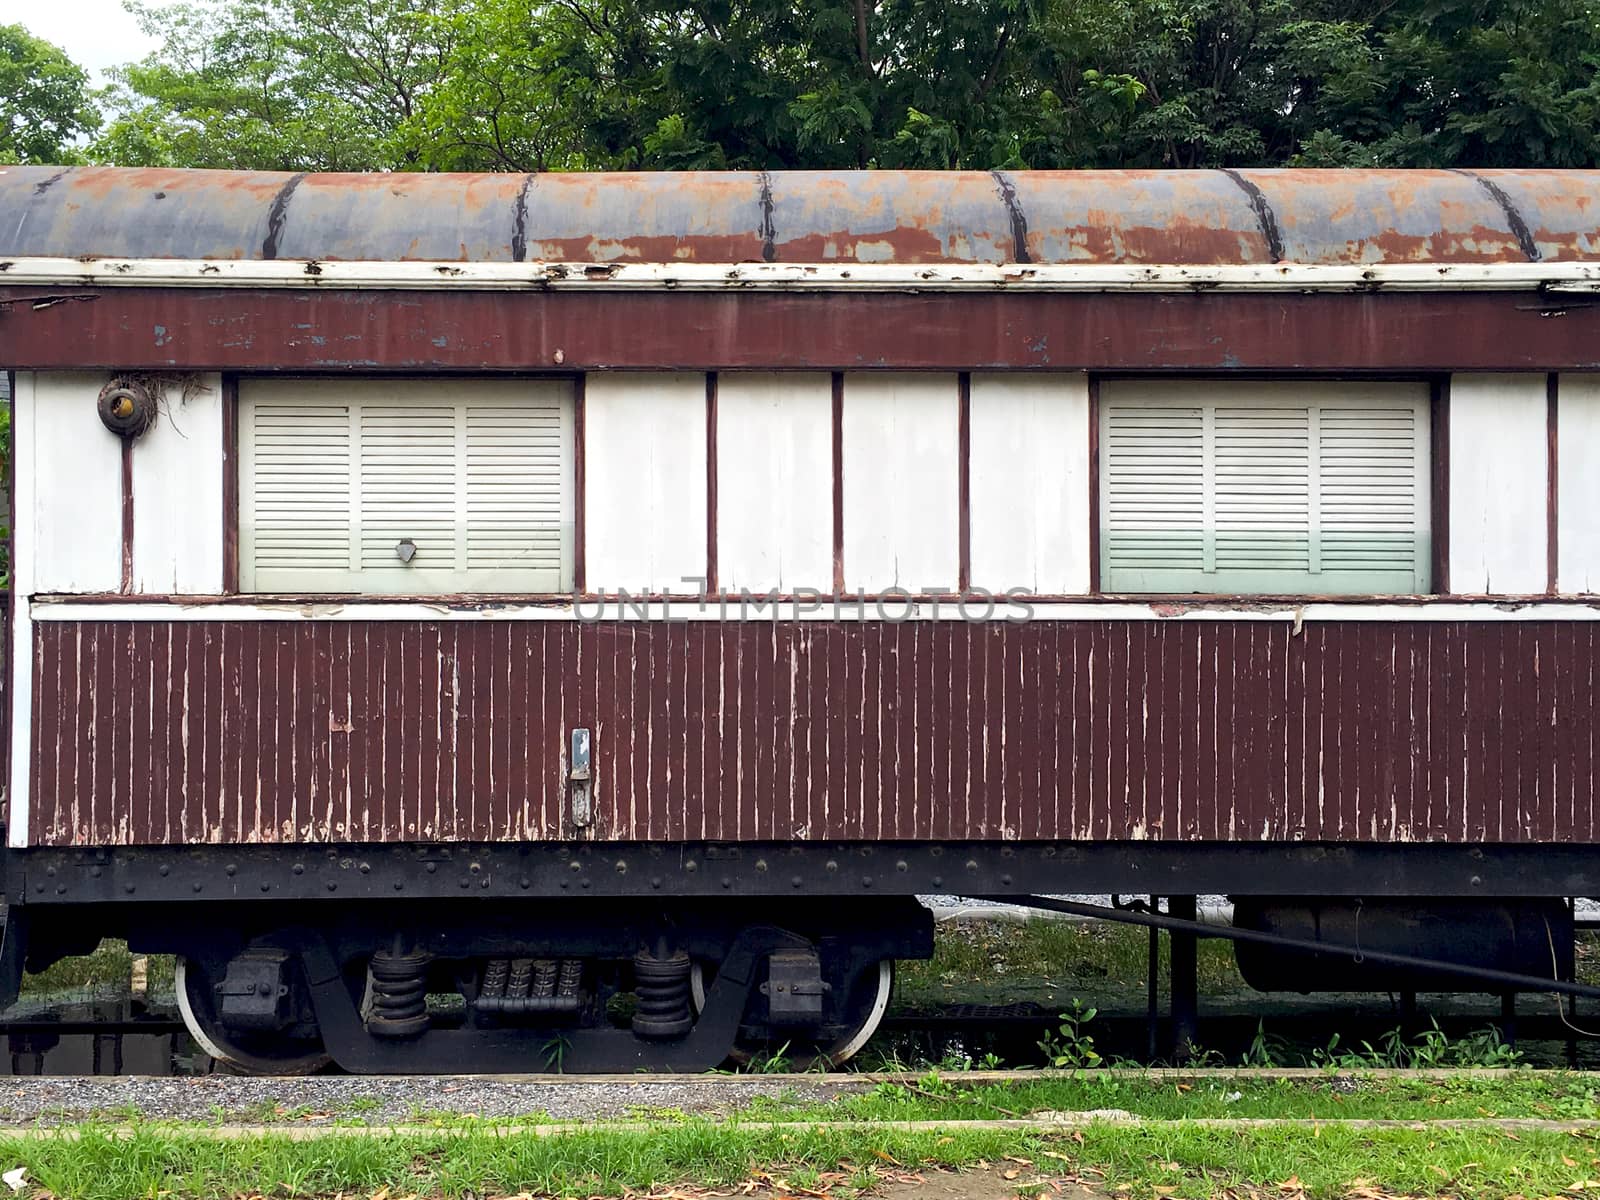 Vintage wooden train railway transportation elevation by polarbearstudio